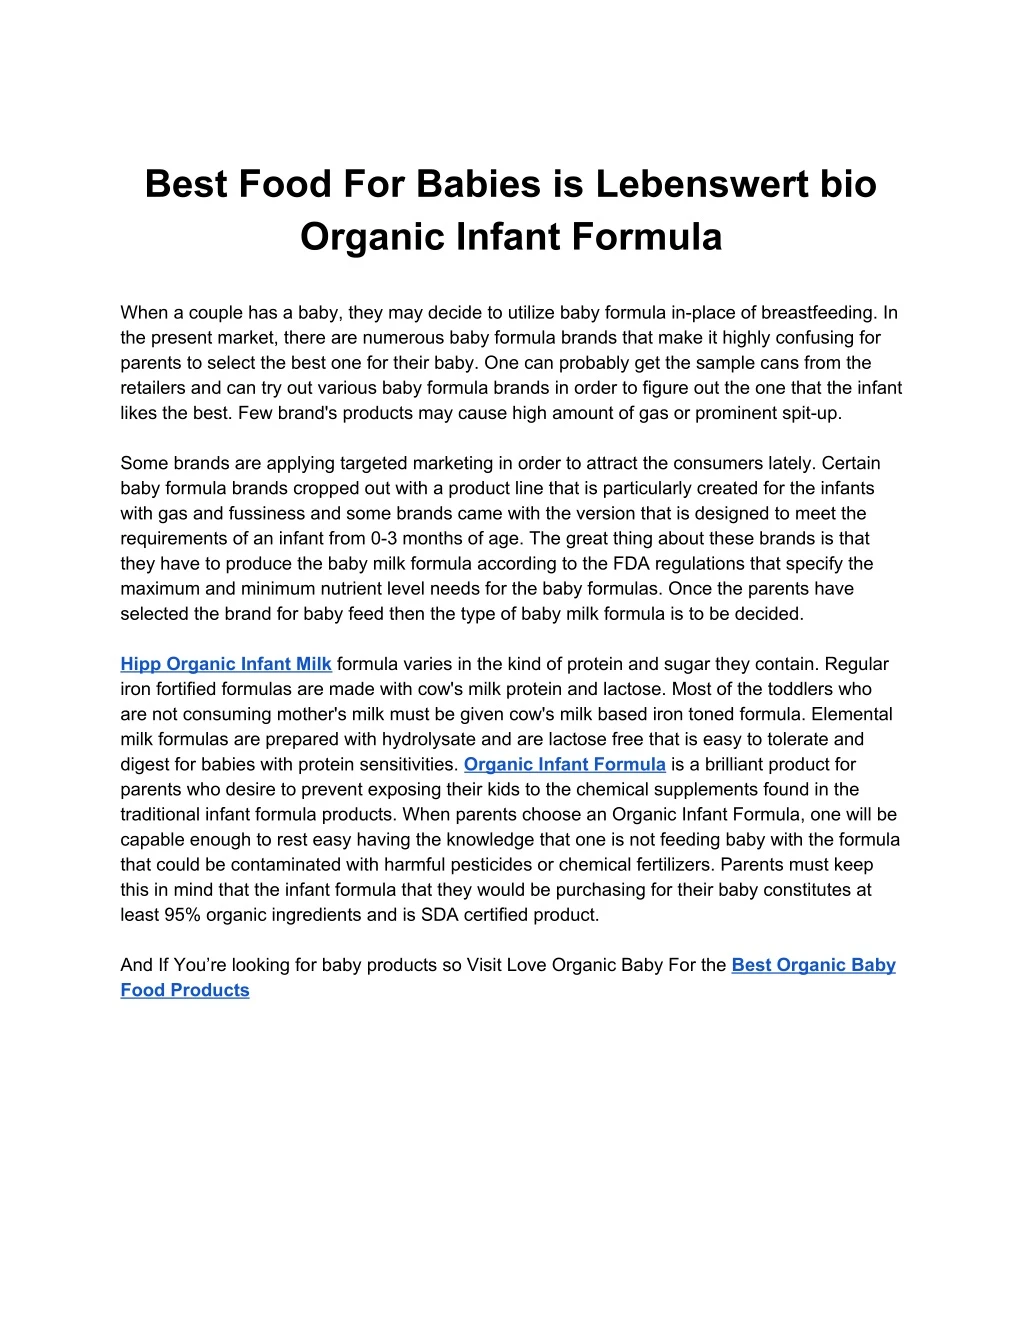 best food for babies is lebenswert bio organic